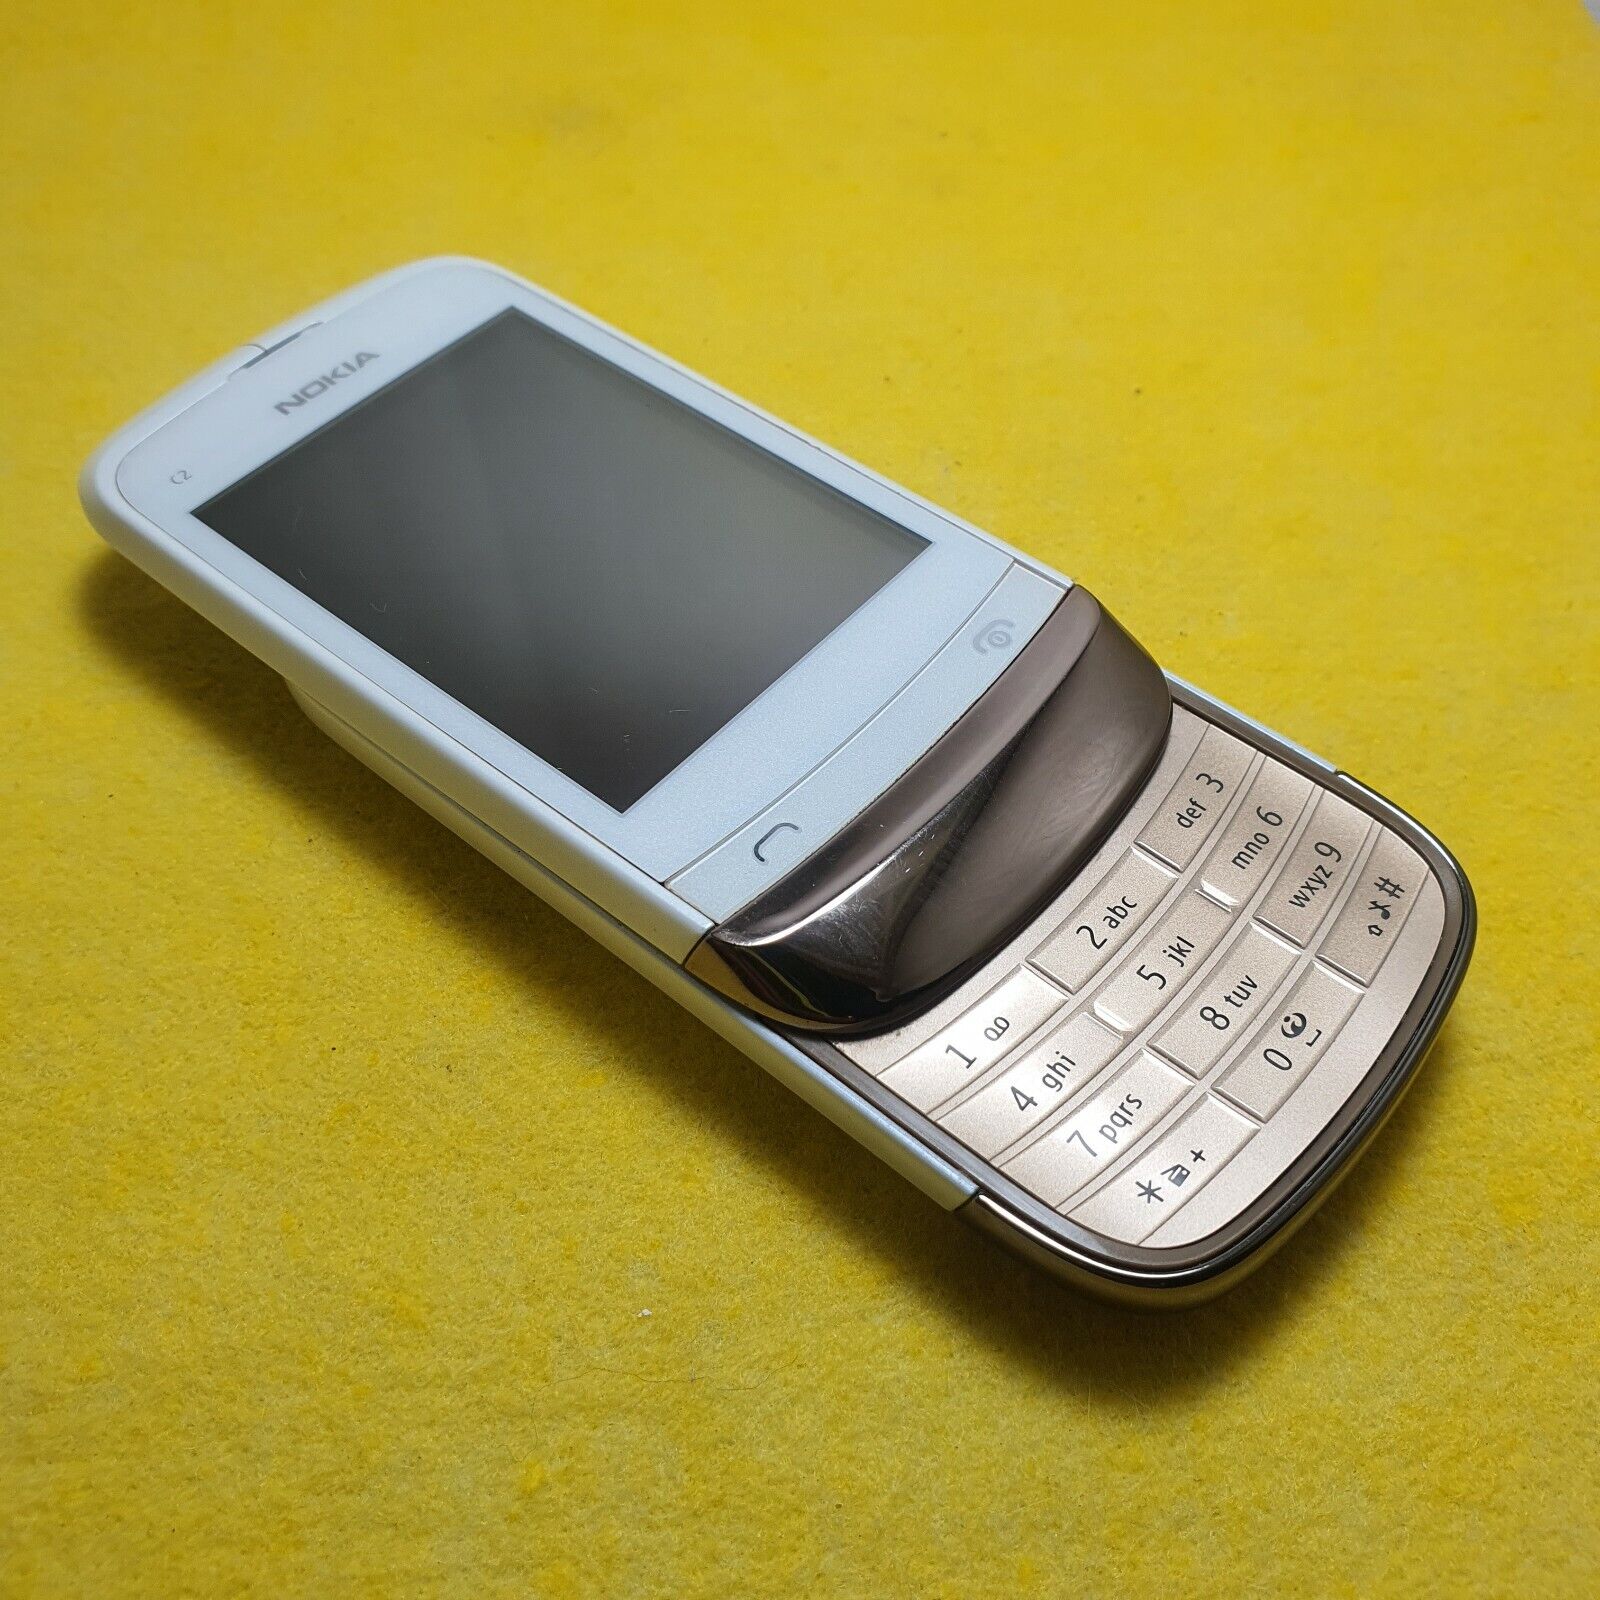 Nokia c2-02 for collectors